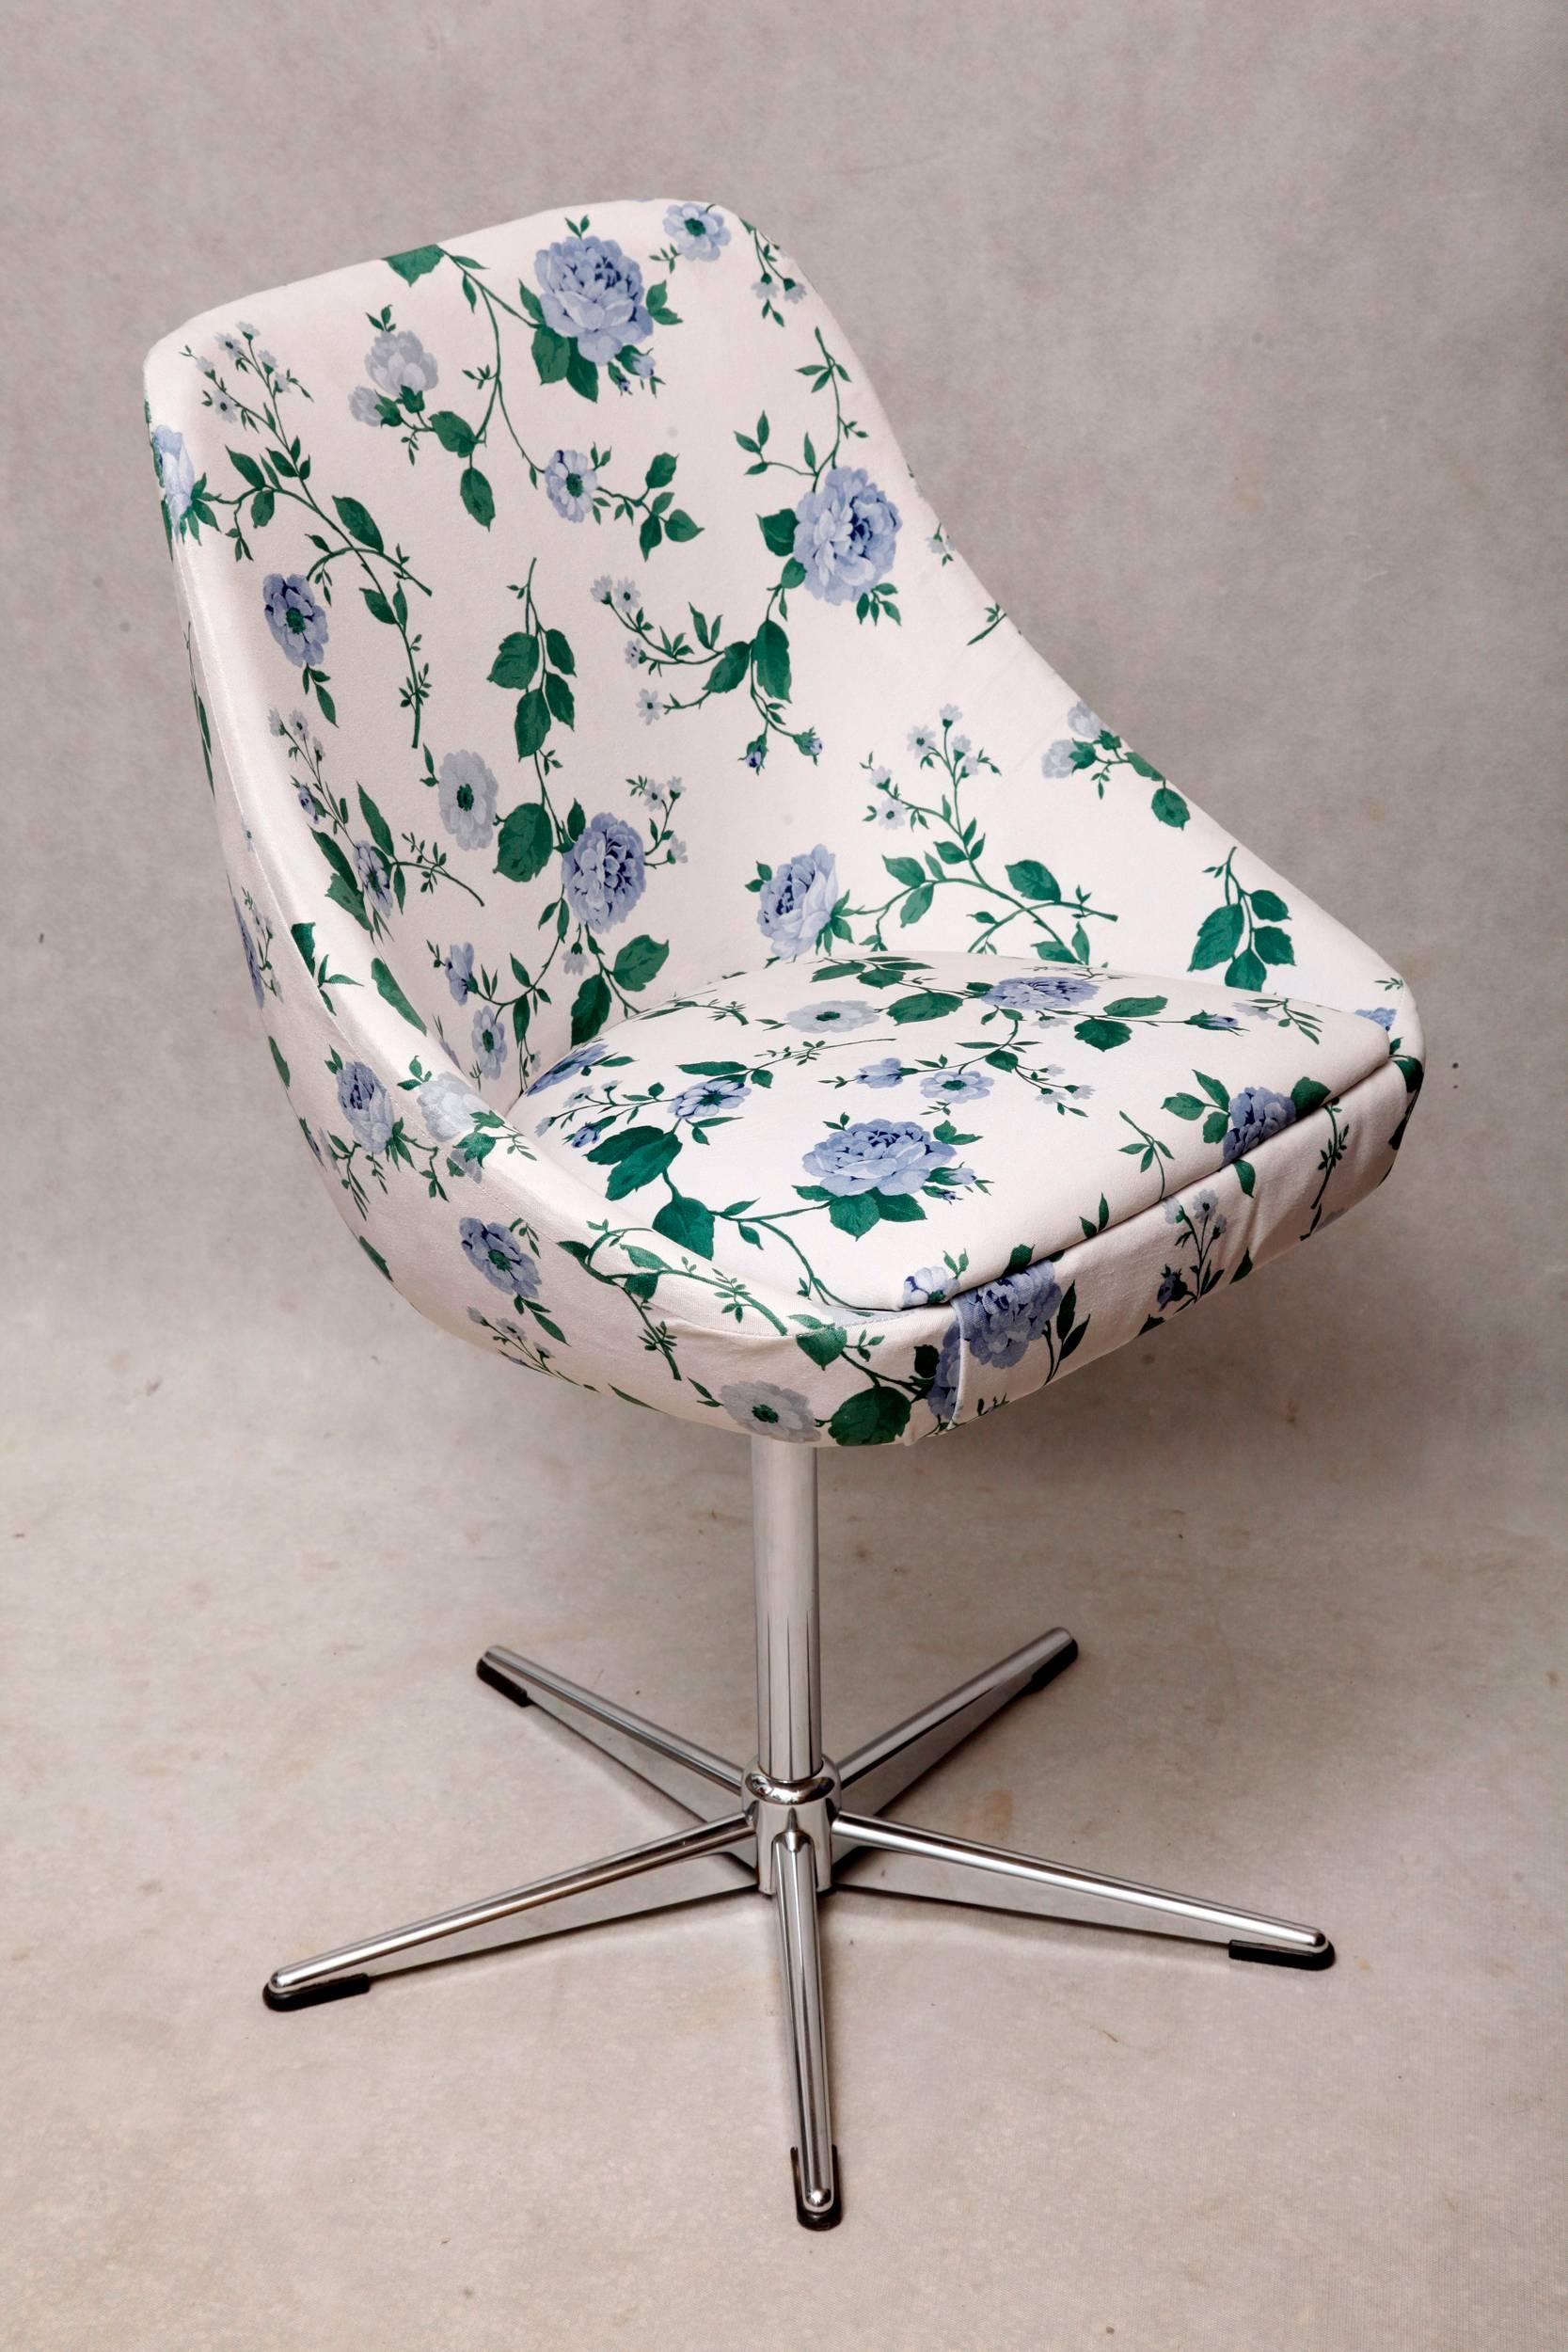 Plush Swivel Chair, Chrome, White and Floar, Poland, 1970s For Sale 2